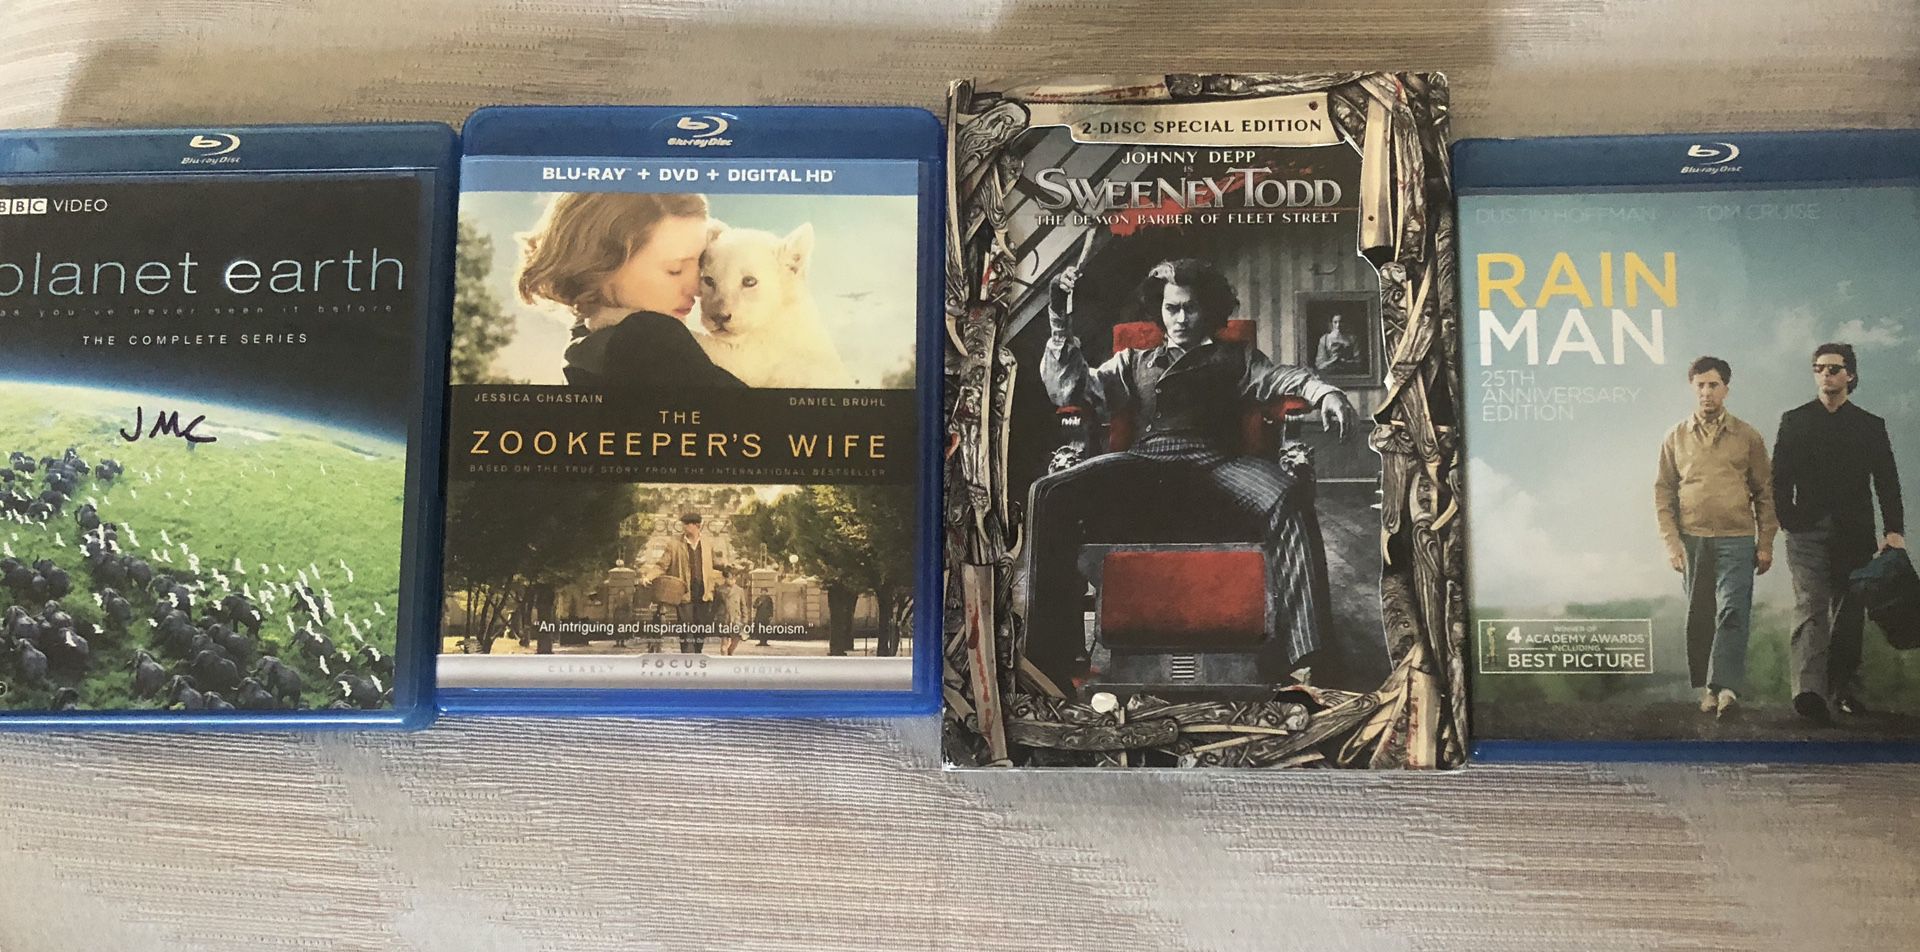 Planet Earth, Zookeepers wife, Sweeney Todd and rain man Blu-Ray/DVD